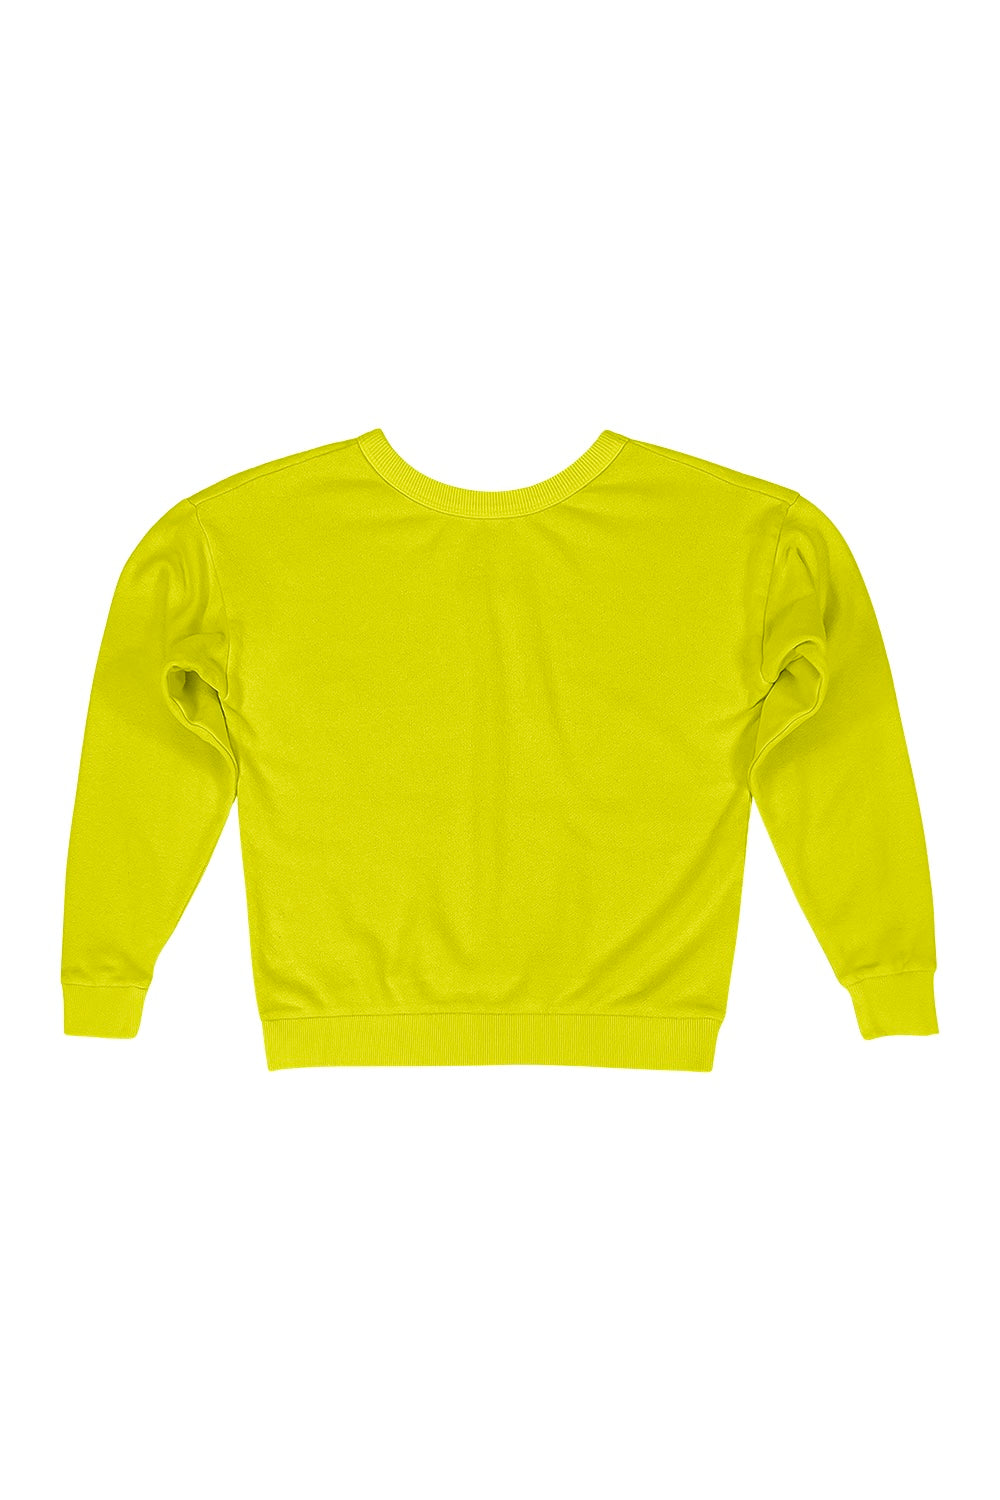 Crux Cropped Sweatshirt | Jungmaven Hemp Clothing & Accessories / Color: Limelight